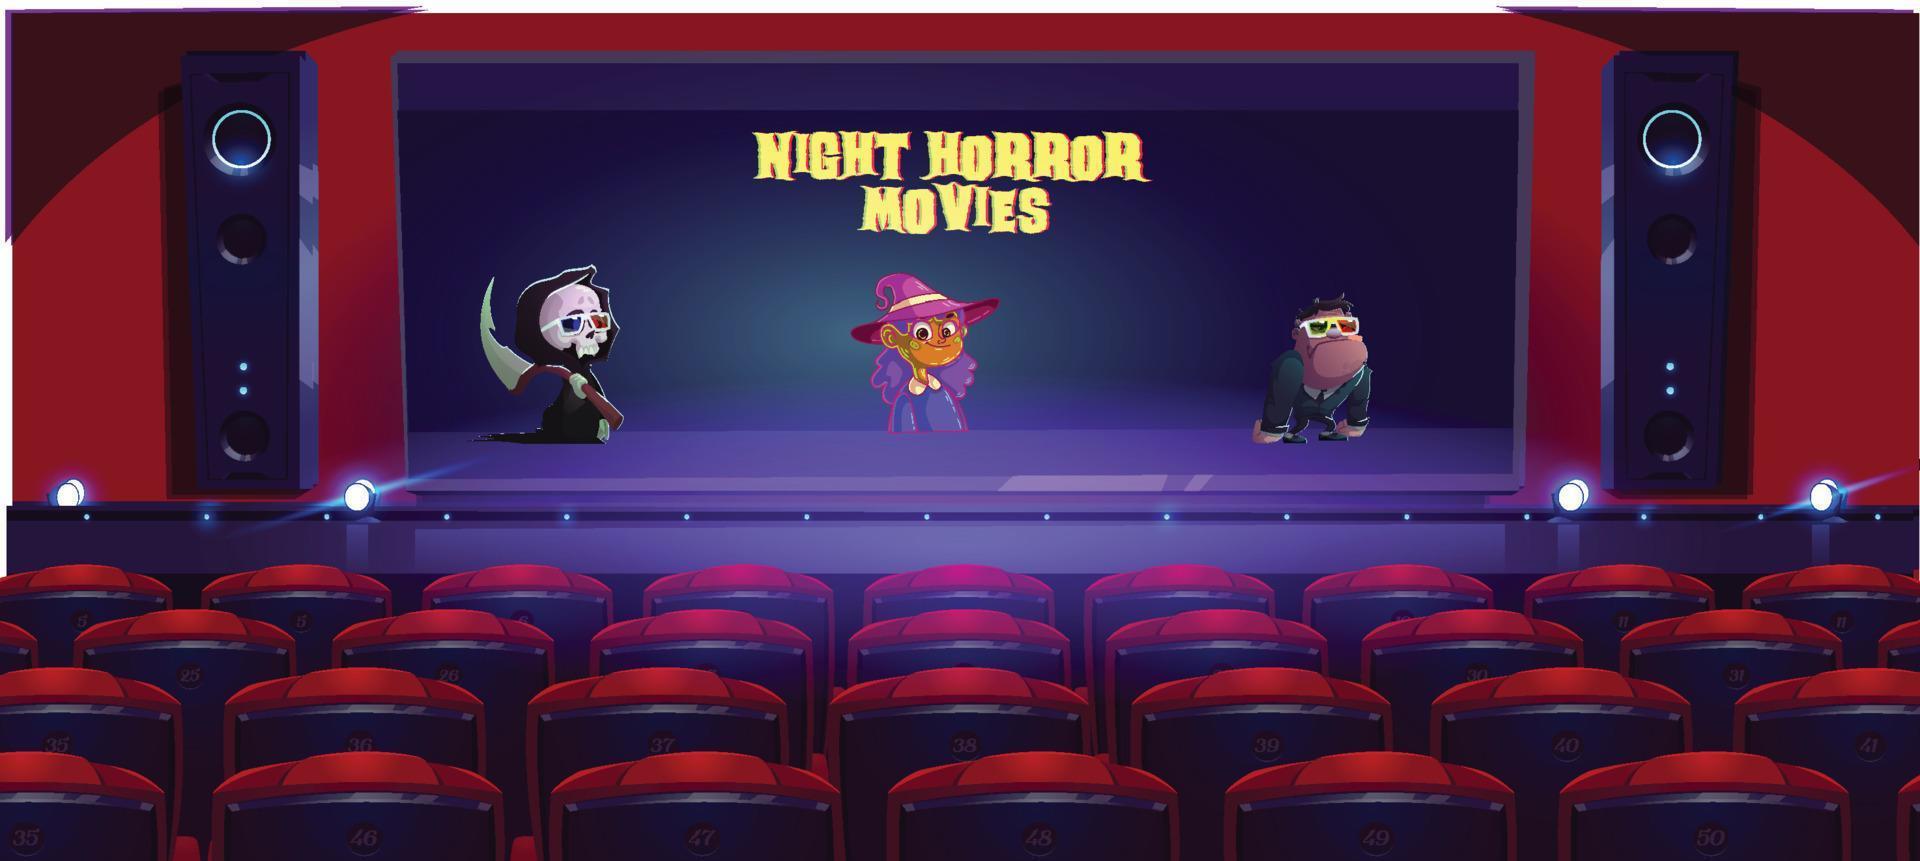 filmes de terror noturnos banner dos desenhos animados monstros engraçados vetor